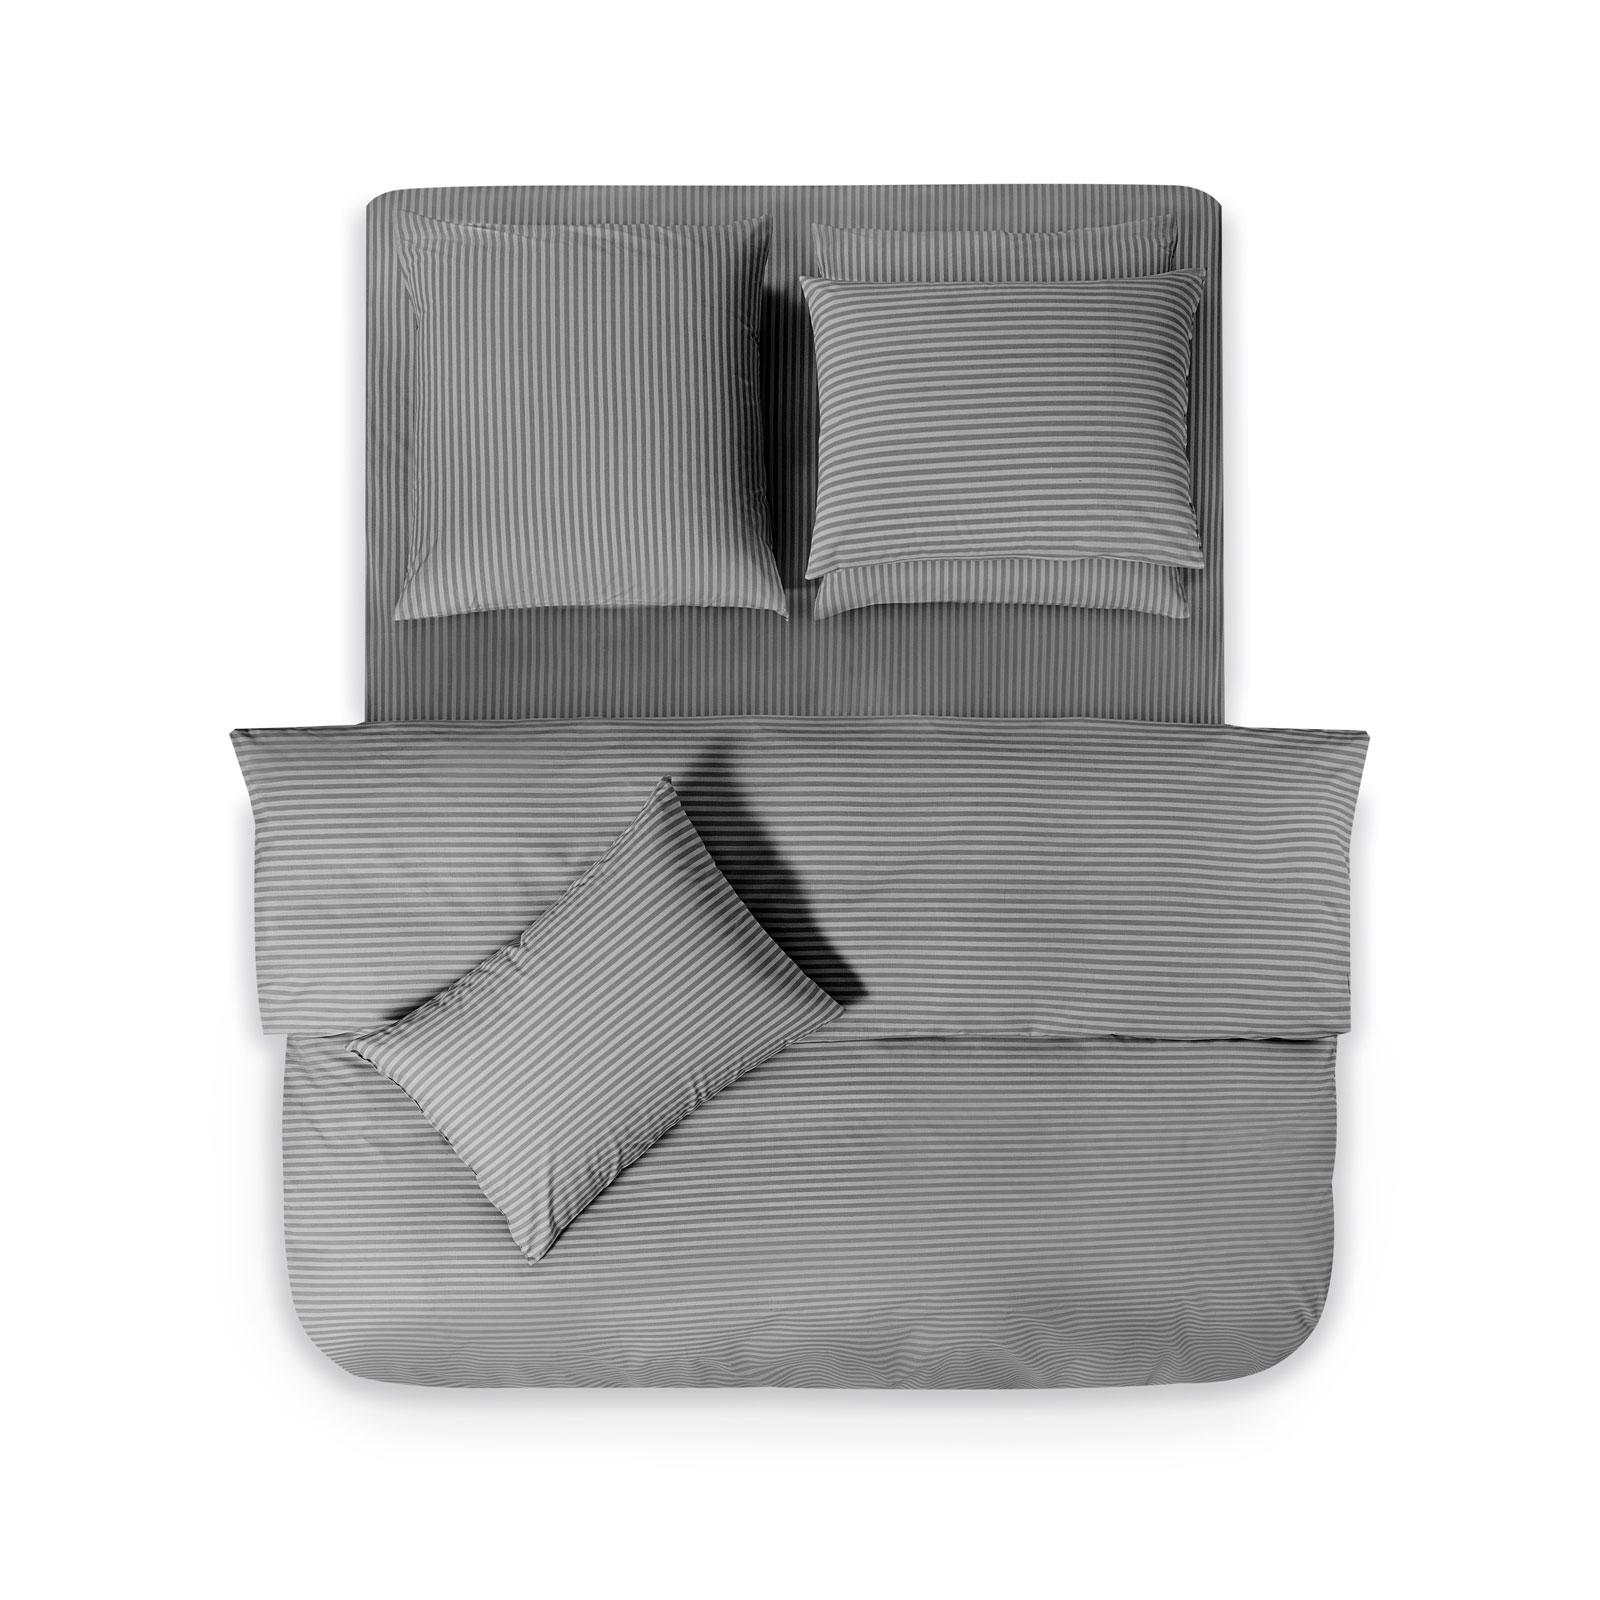 Простыня на резинке Medsleep Линдау серый 160х200х25 см - фото 2